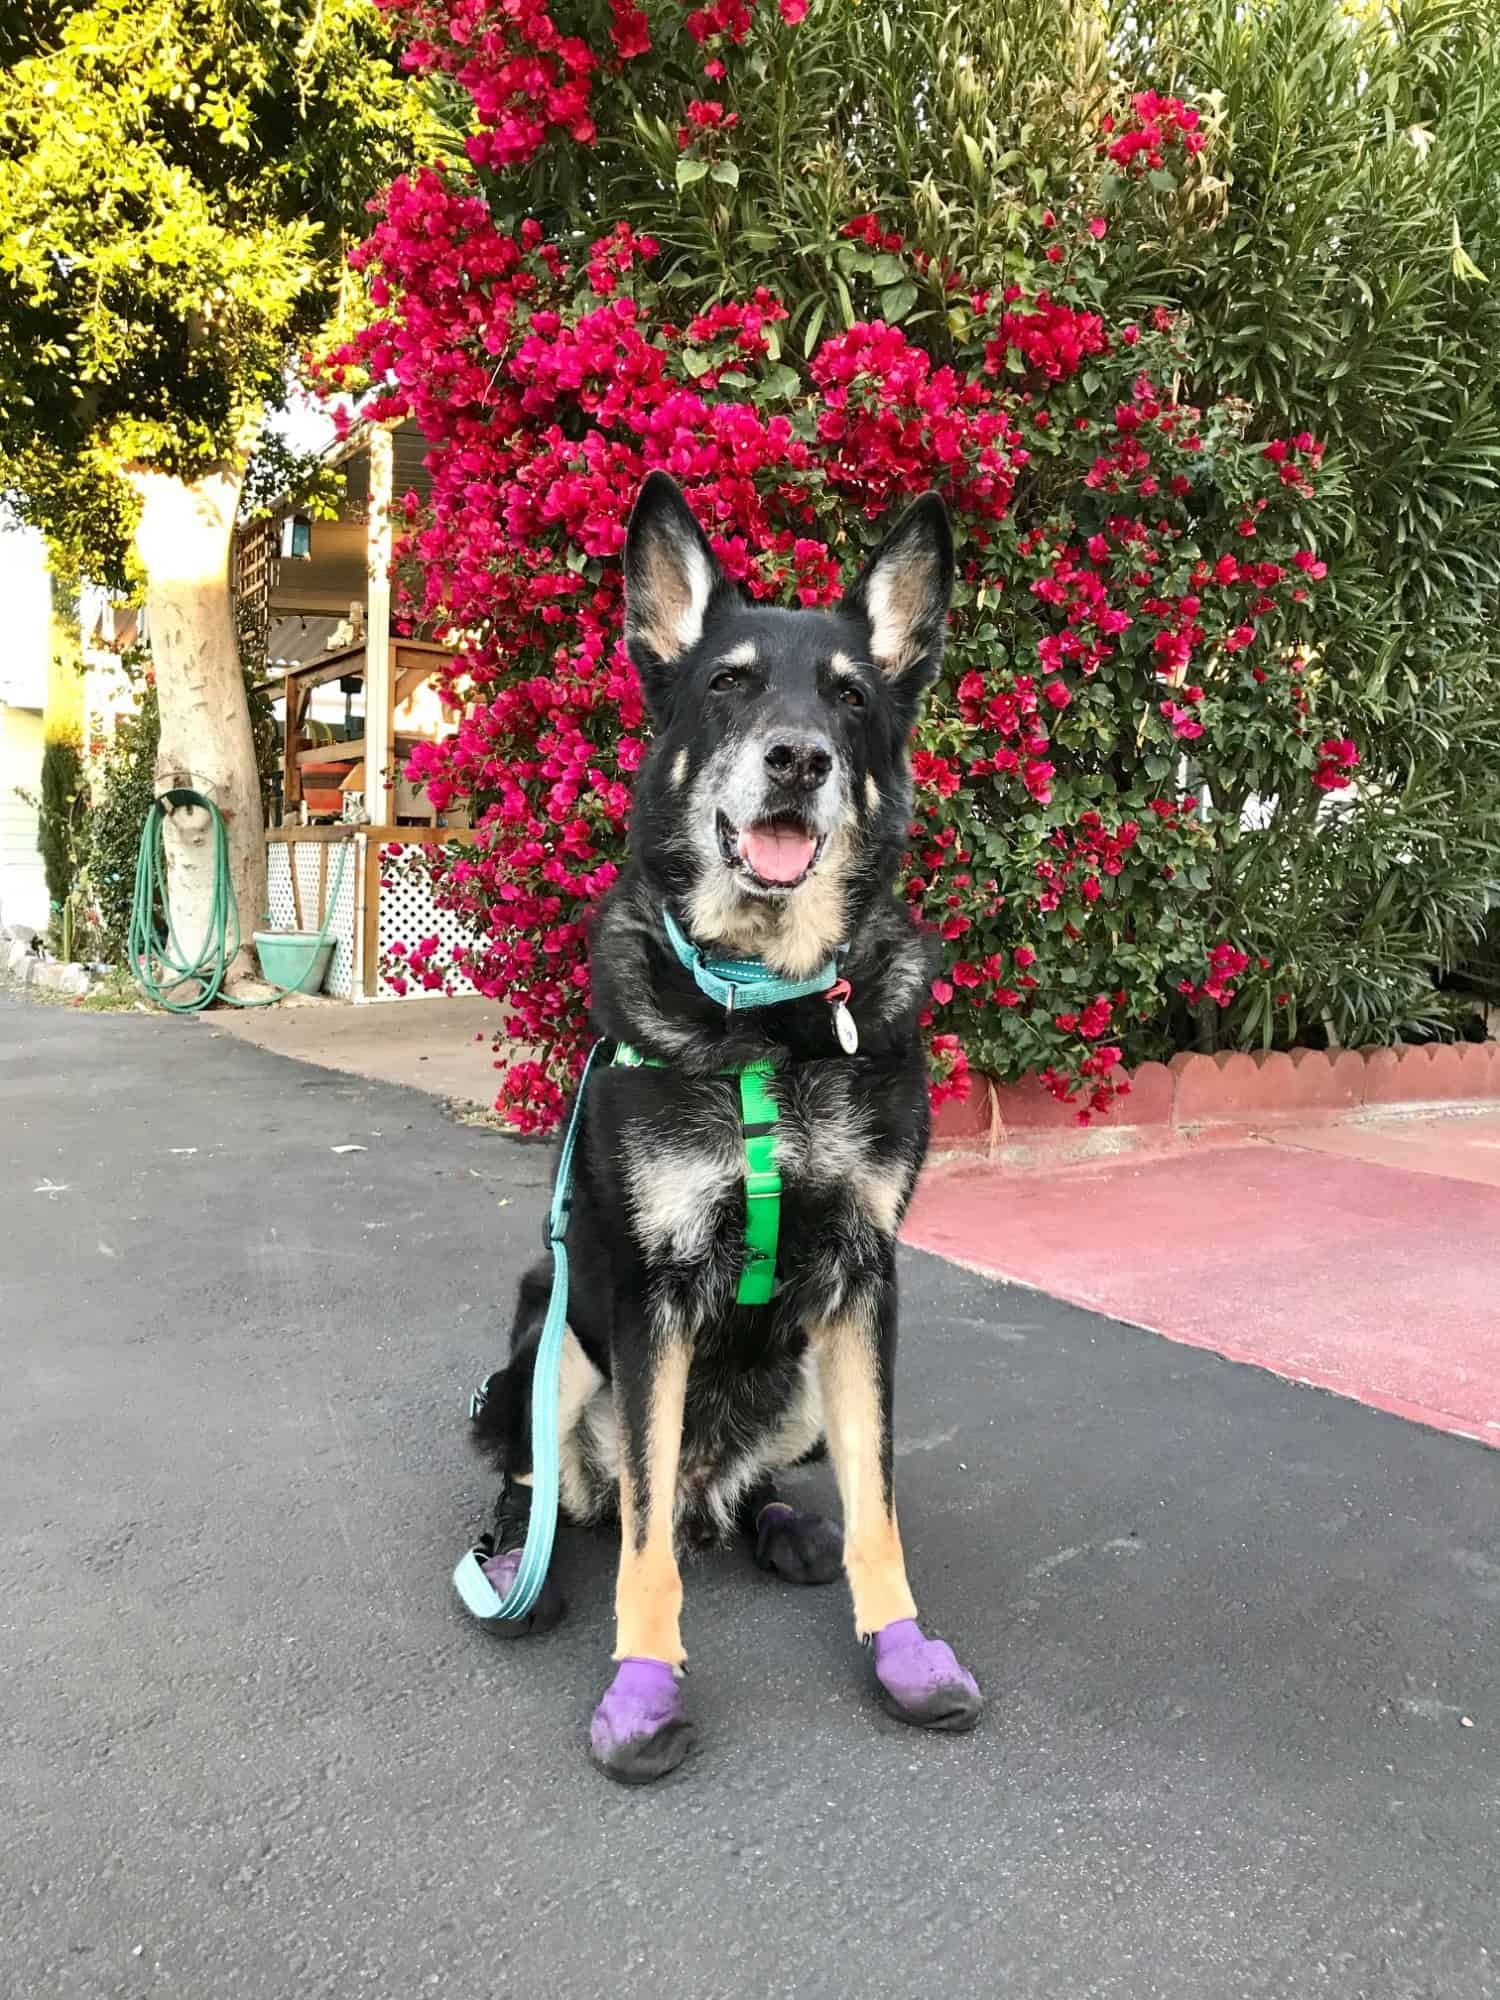 Buster the German shepherd walking in purple dog boots